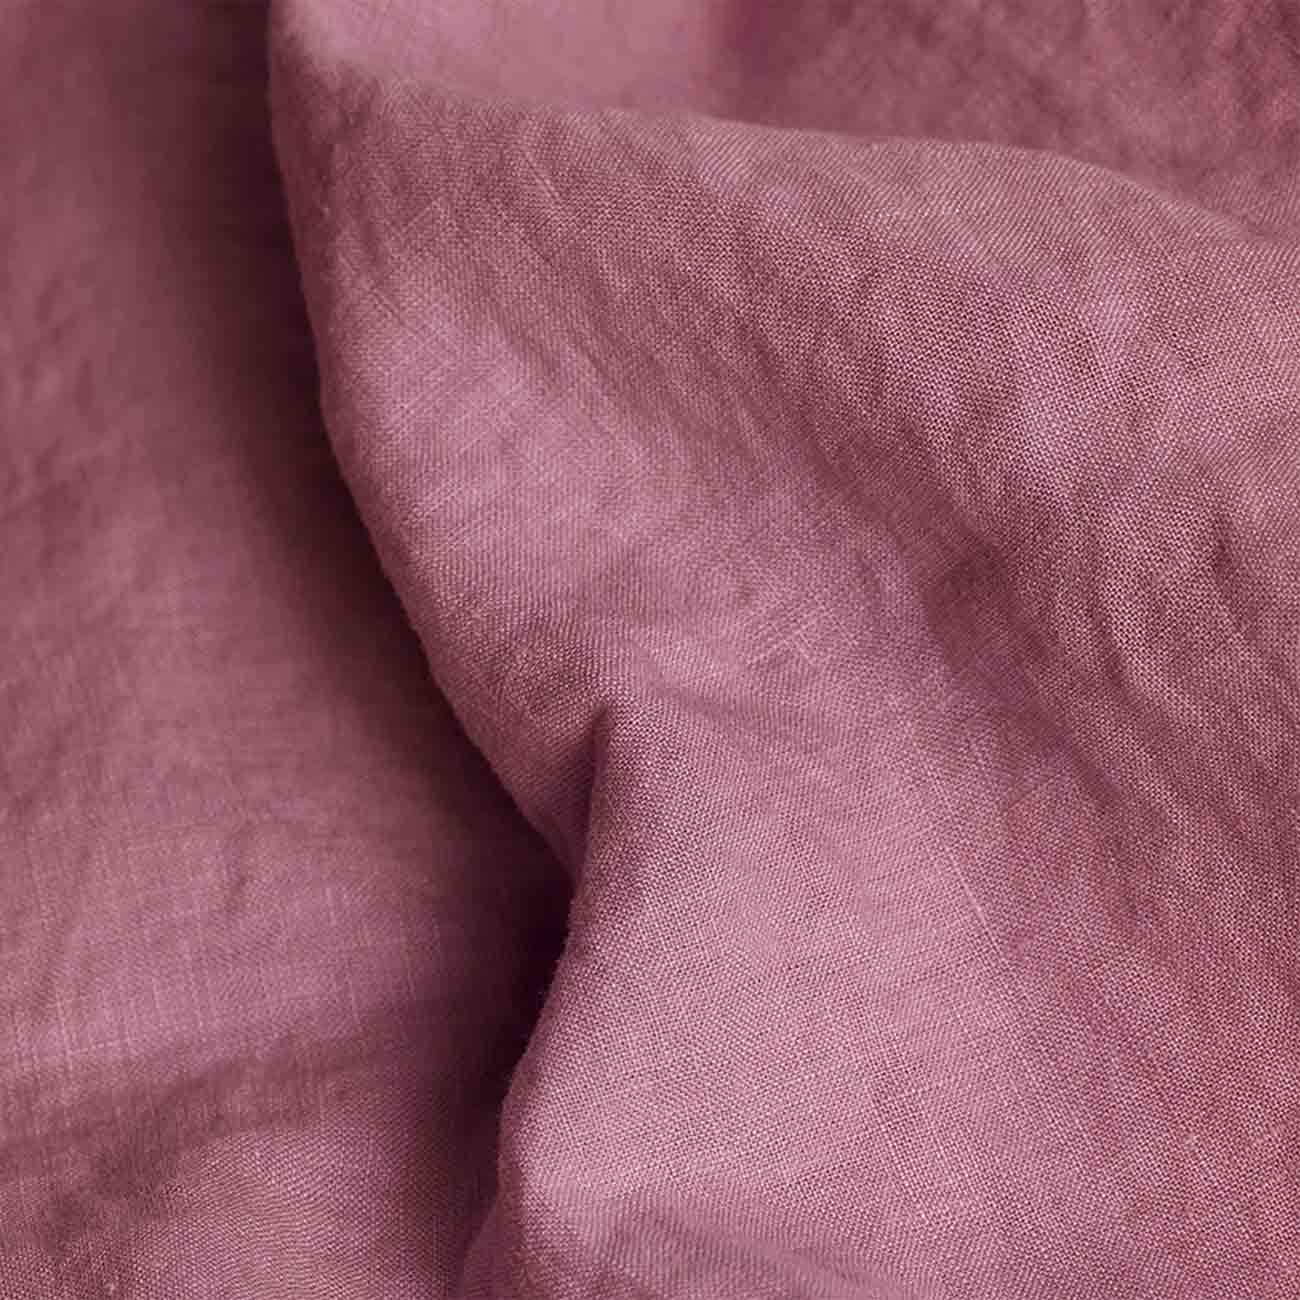 Raspberry Linen Pillowcases (Pair)